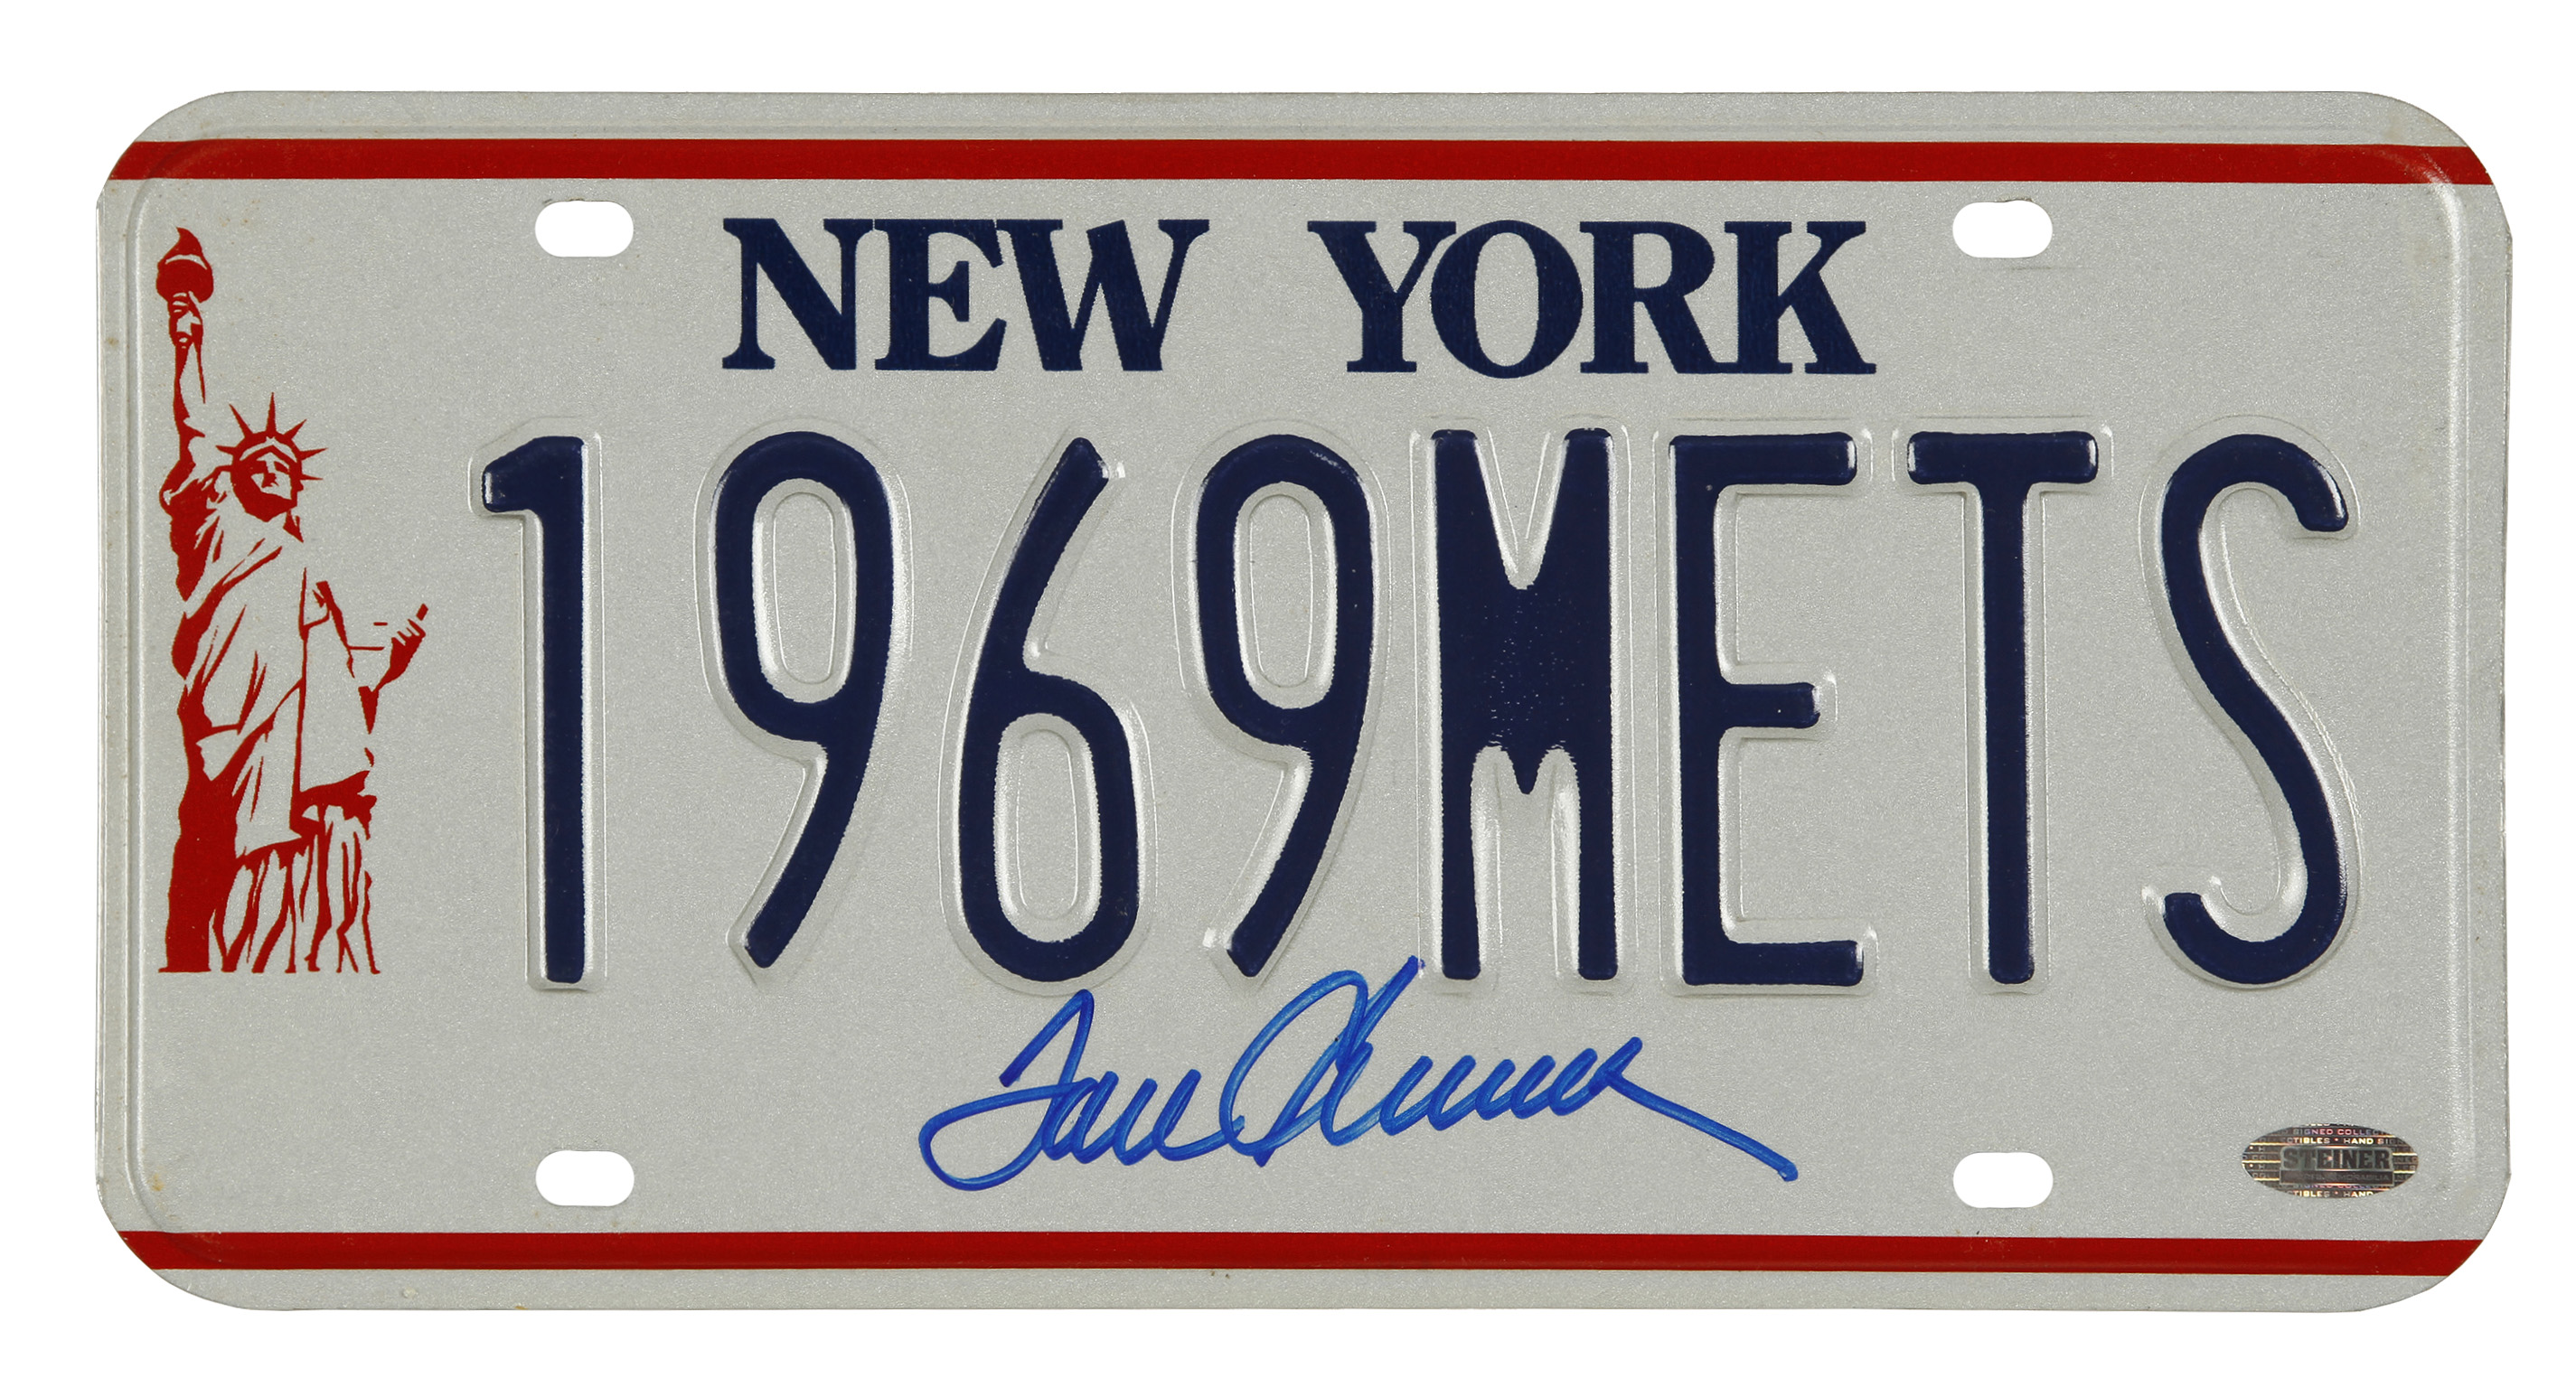 Car license. License Plate. American number Plates. Плоские License Plate. License Plate number.